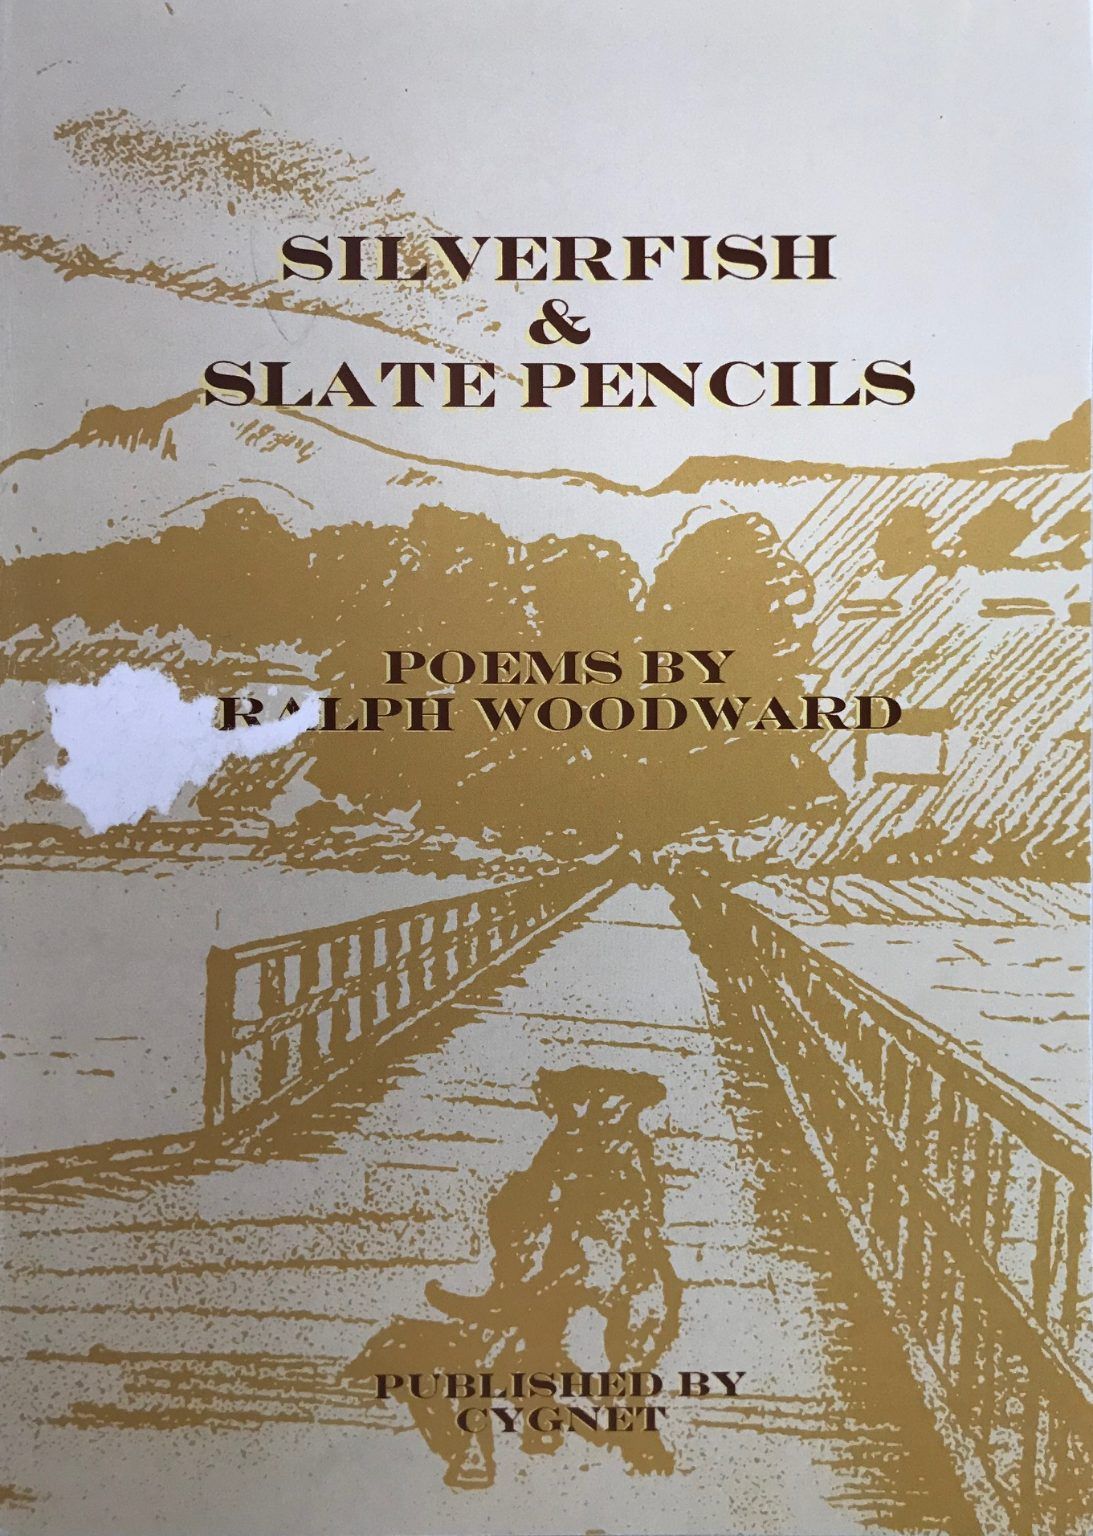 SILVERFISH & SLATE PENCILS